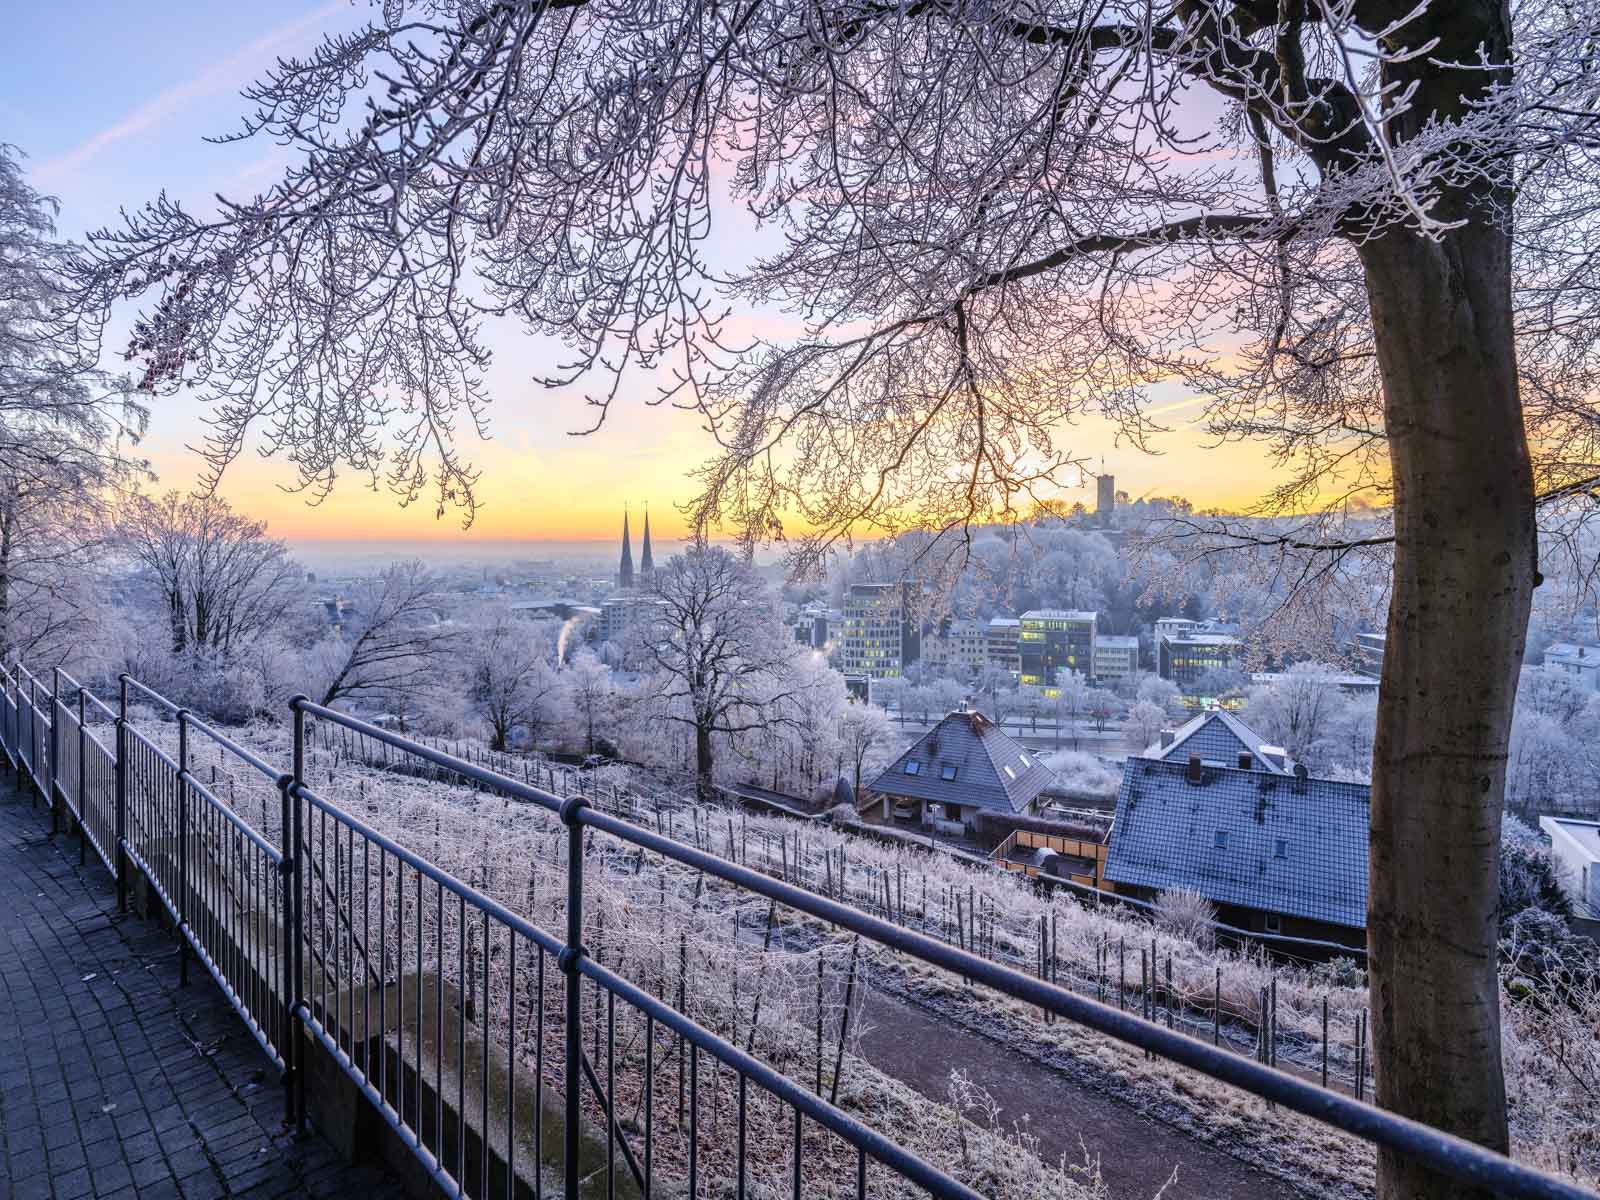 Dawn on the 'Johannisberg' on a morning in December 2021 (Bielefeld, Germany).